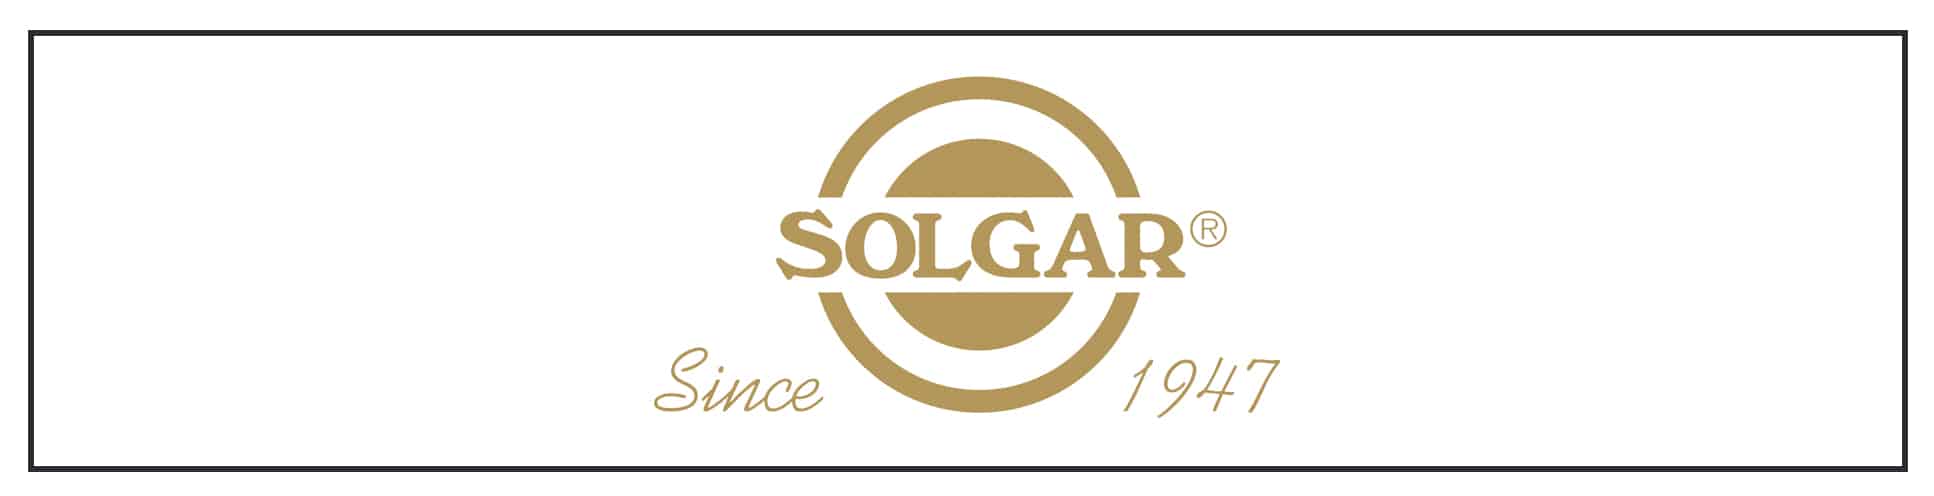 The logo for solgar since 1977.